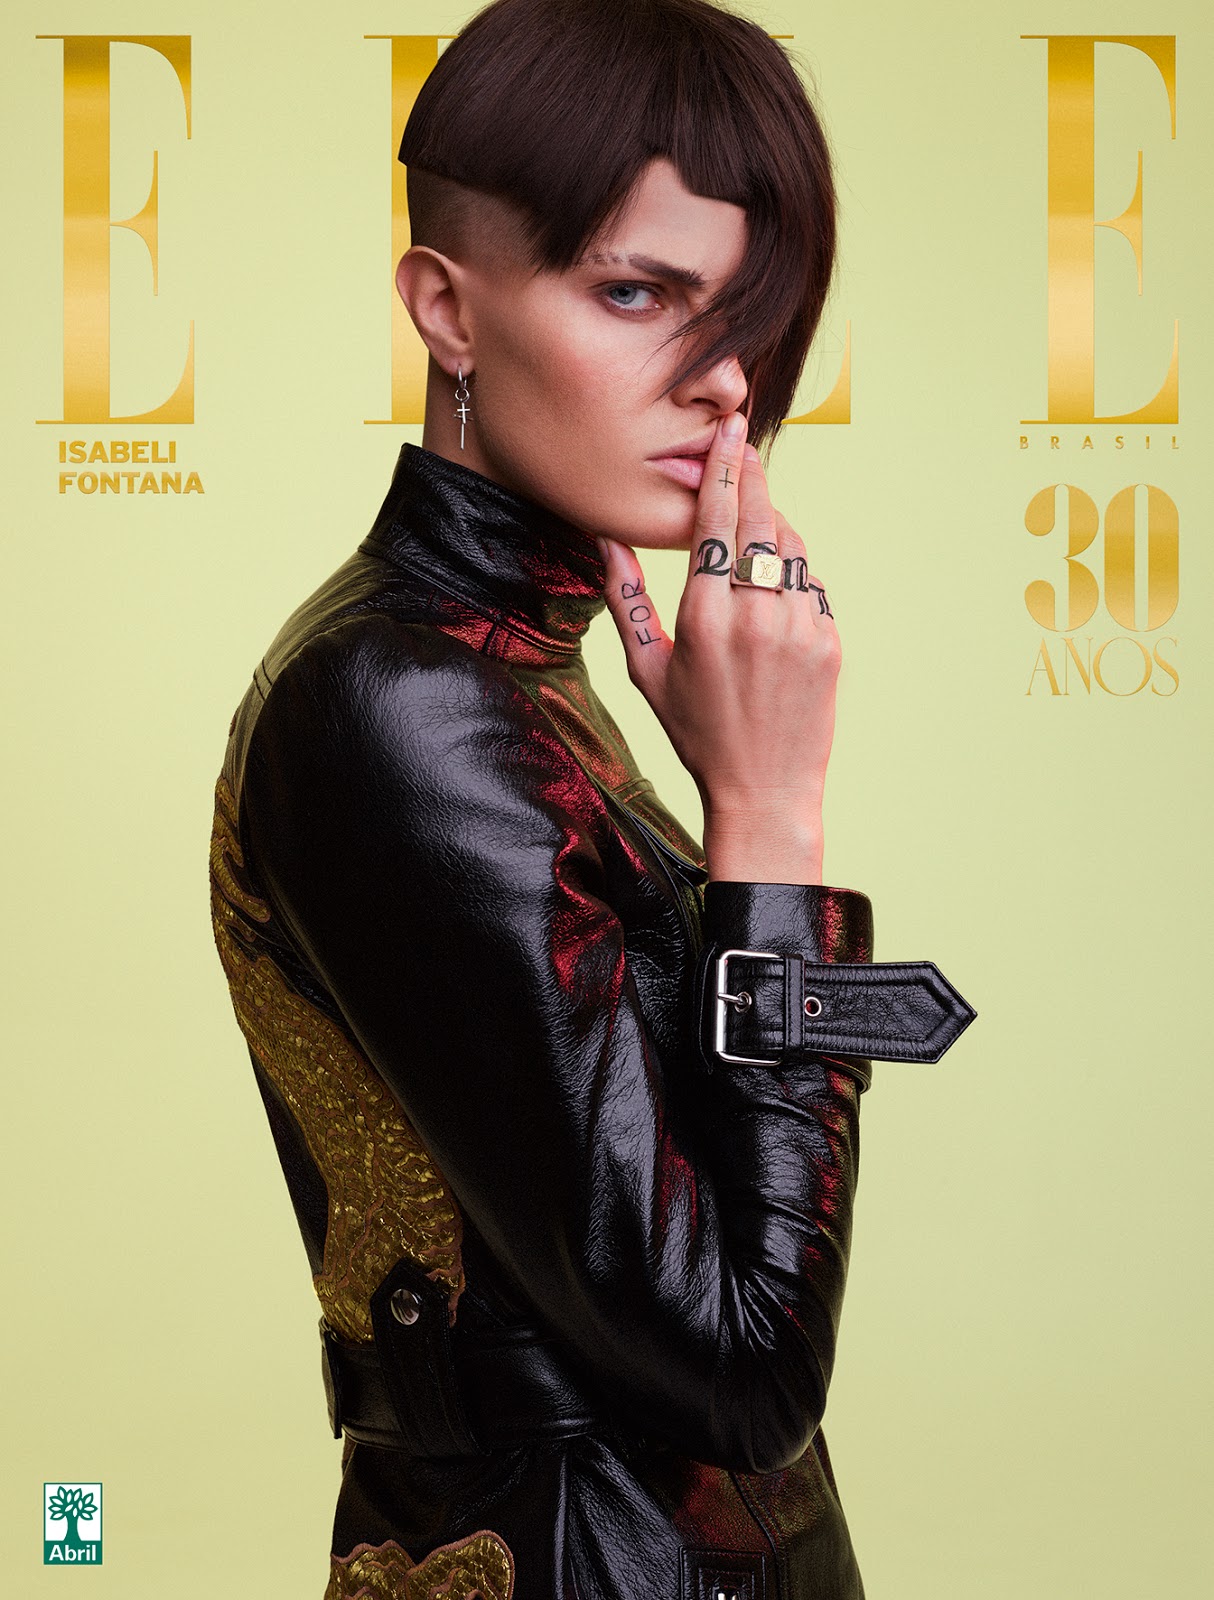 ELLE Brasil comemora 30 anos e traz Isabeli Fontana na capa